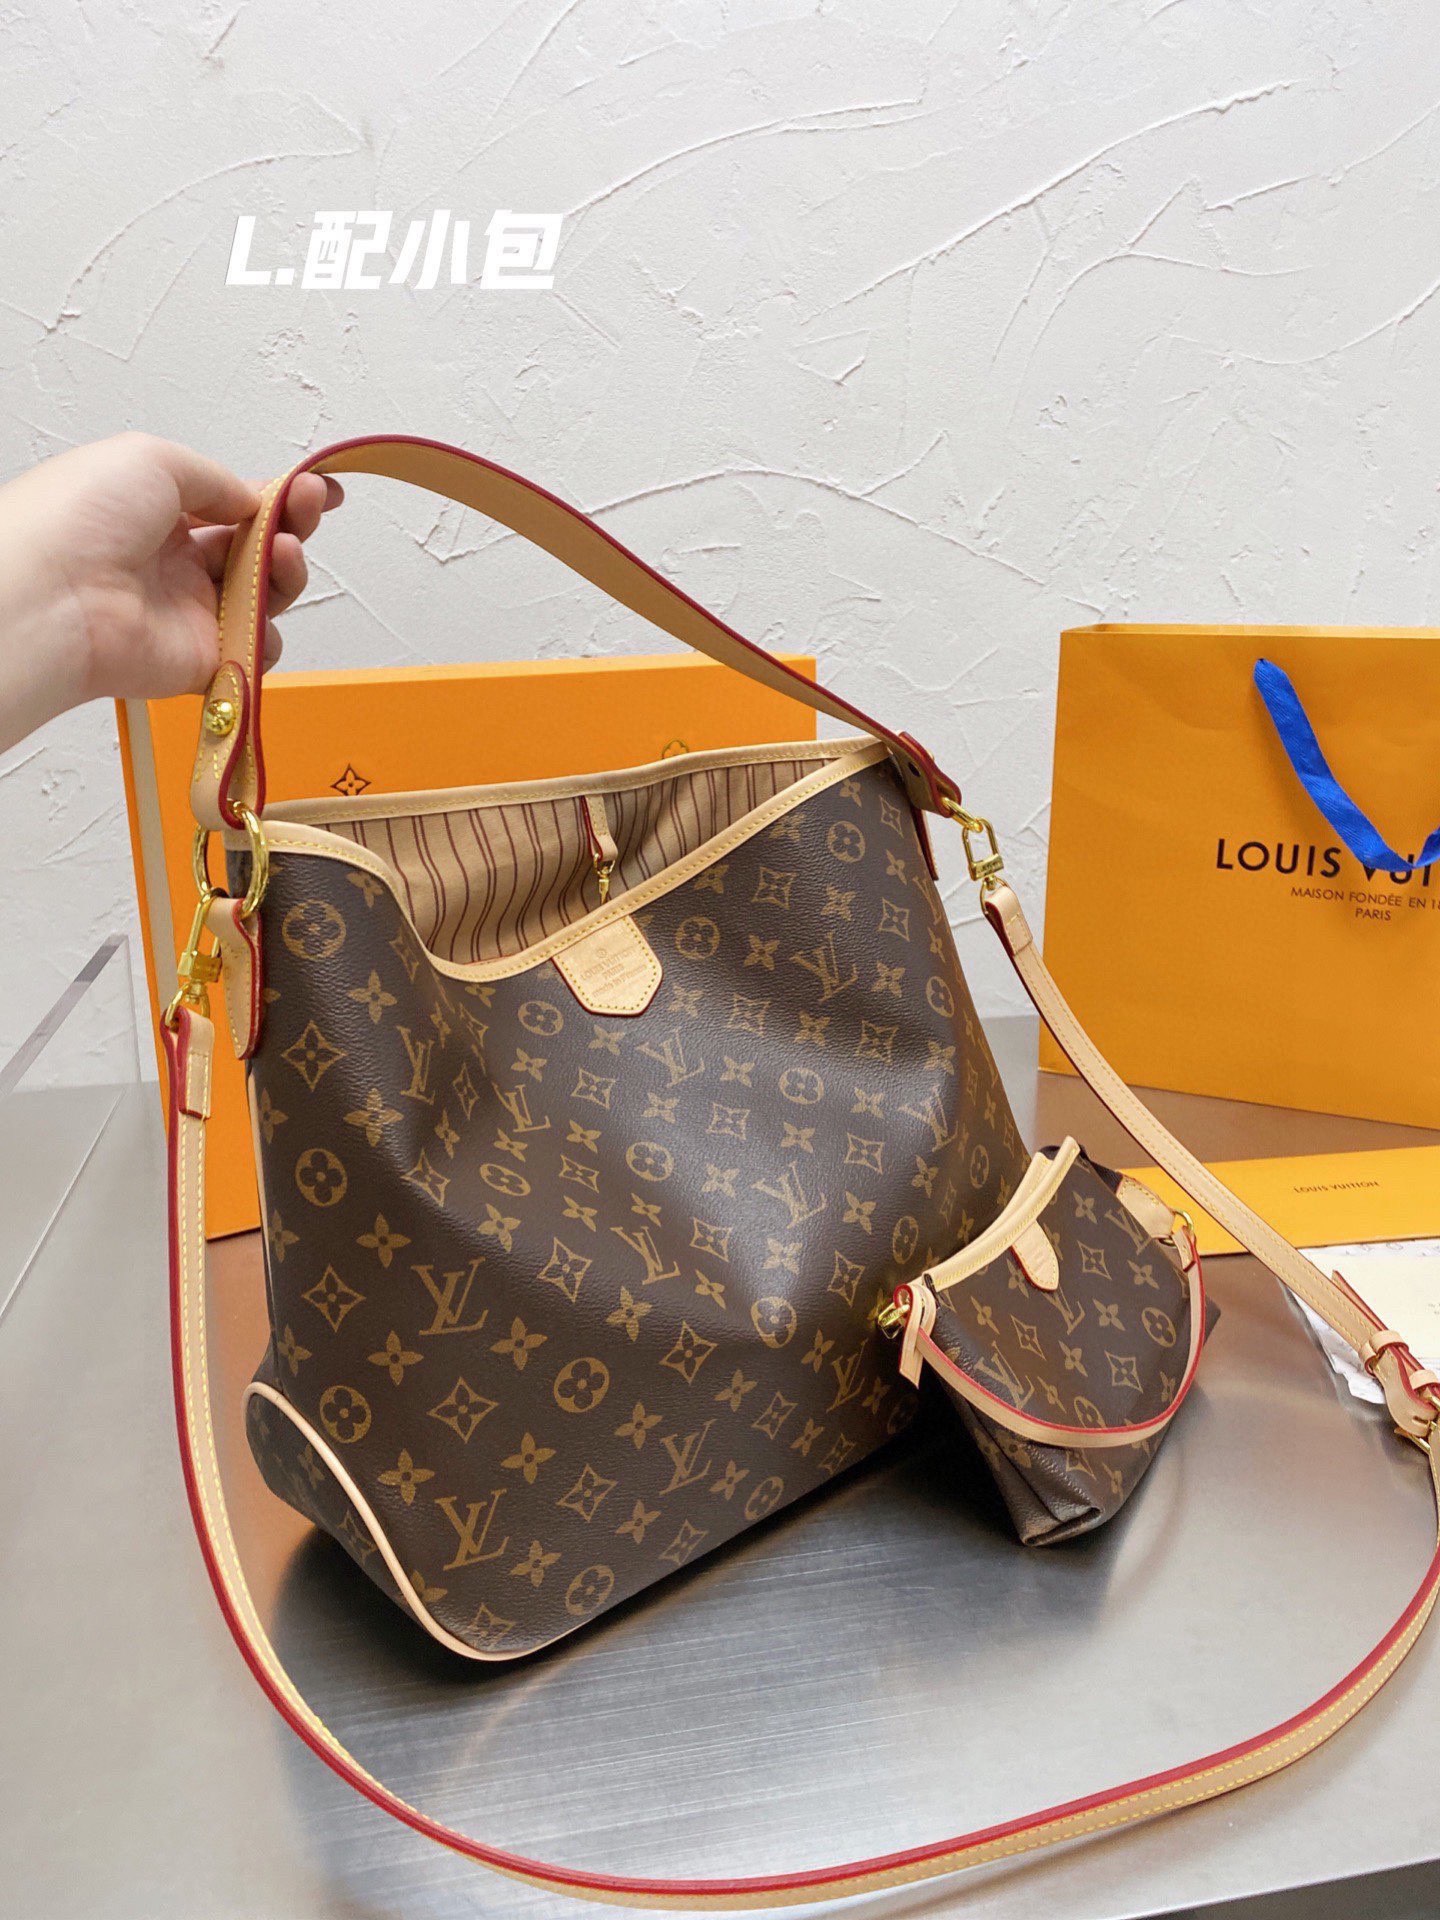 LV Louis Vuitton Handbags Tote Shopping Bags 2 In 1